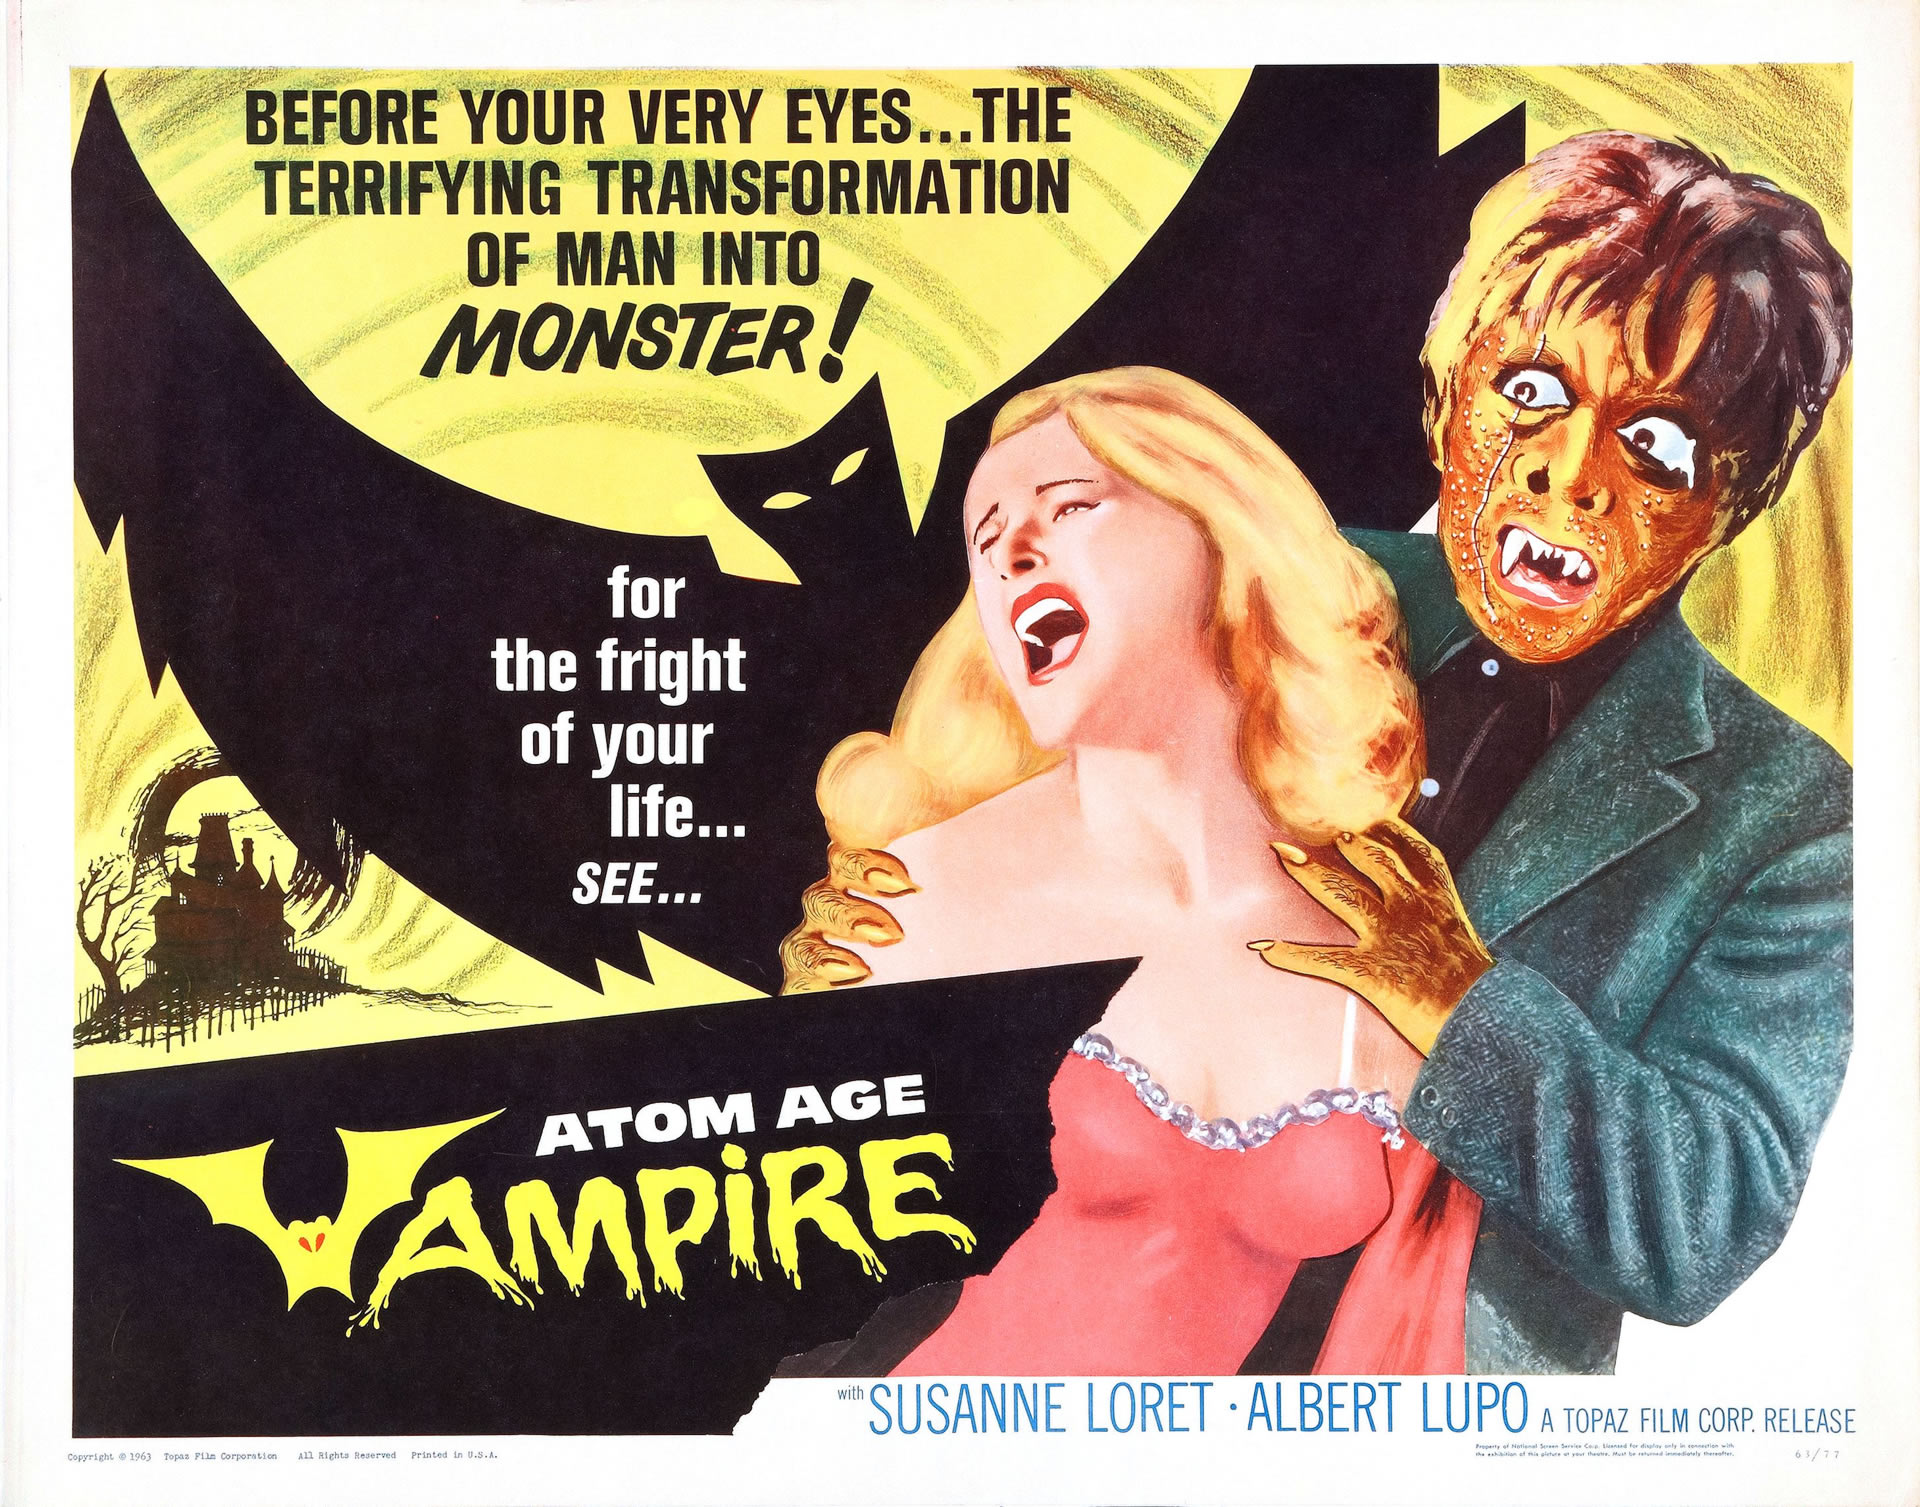 Atom Age Vampire - Vampire B Movie Posters Wallpaper Image